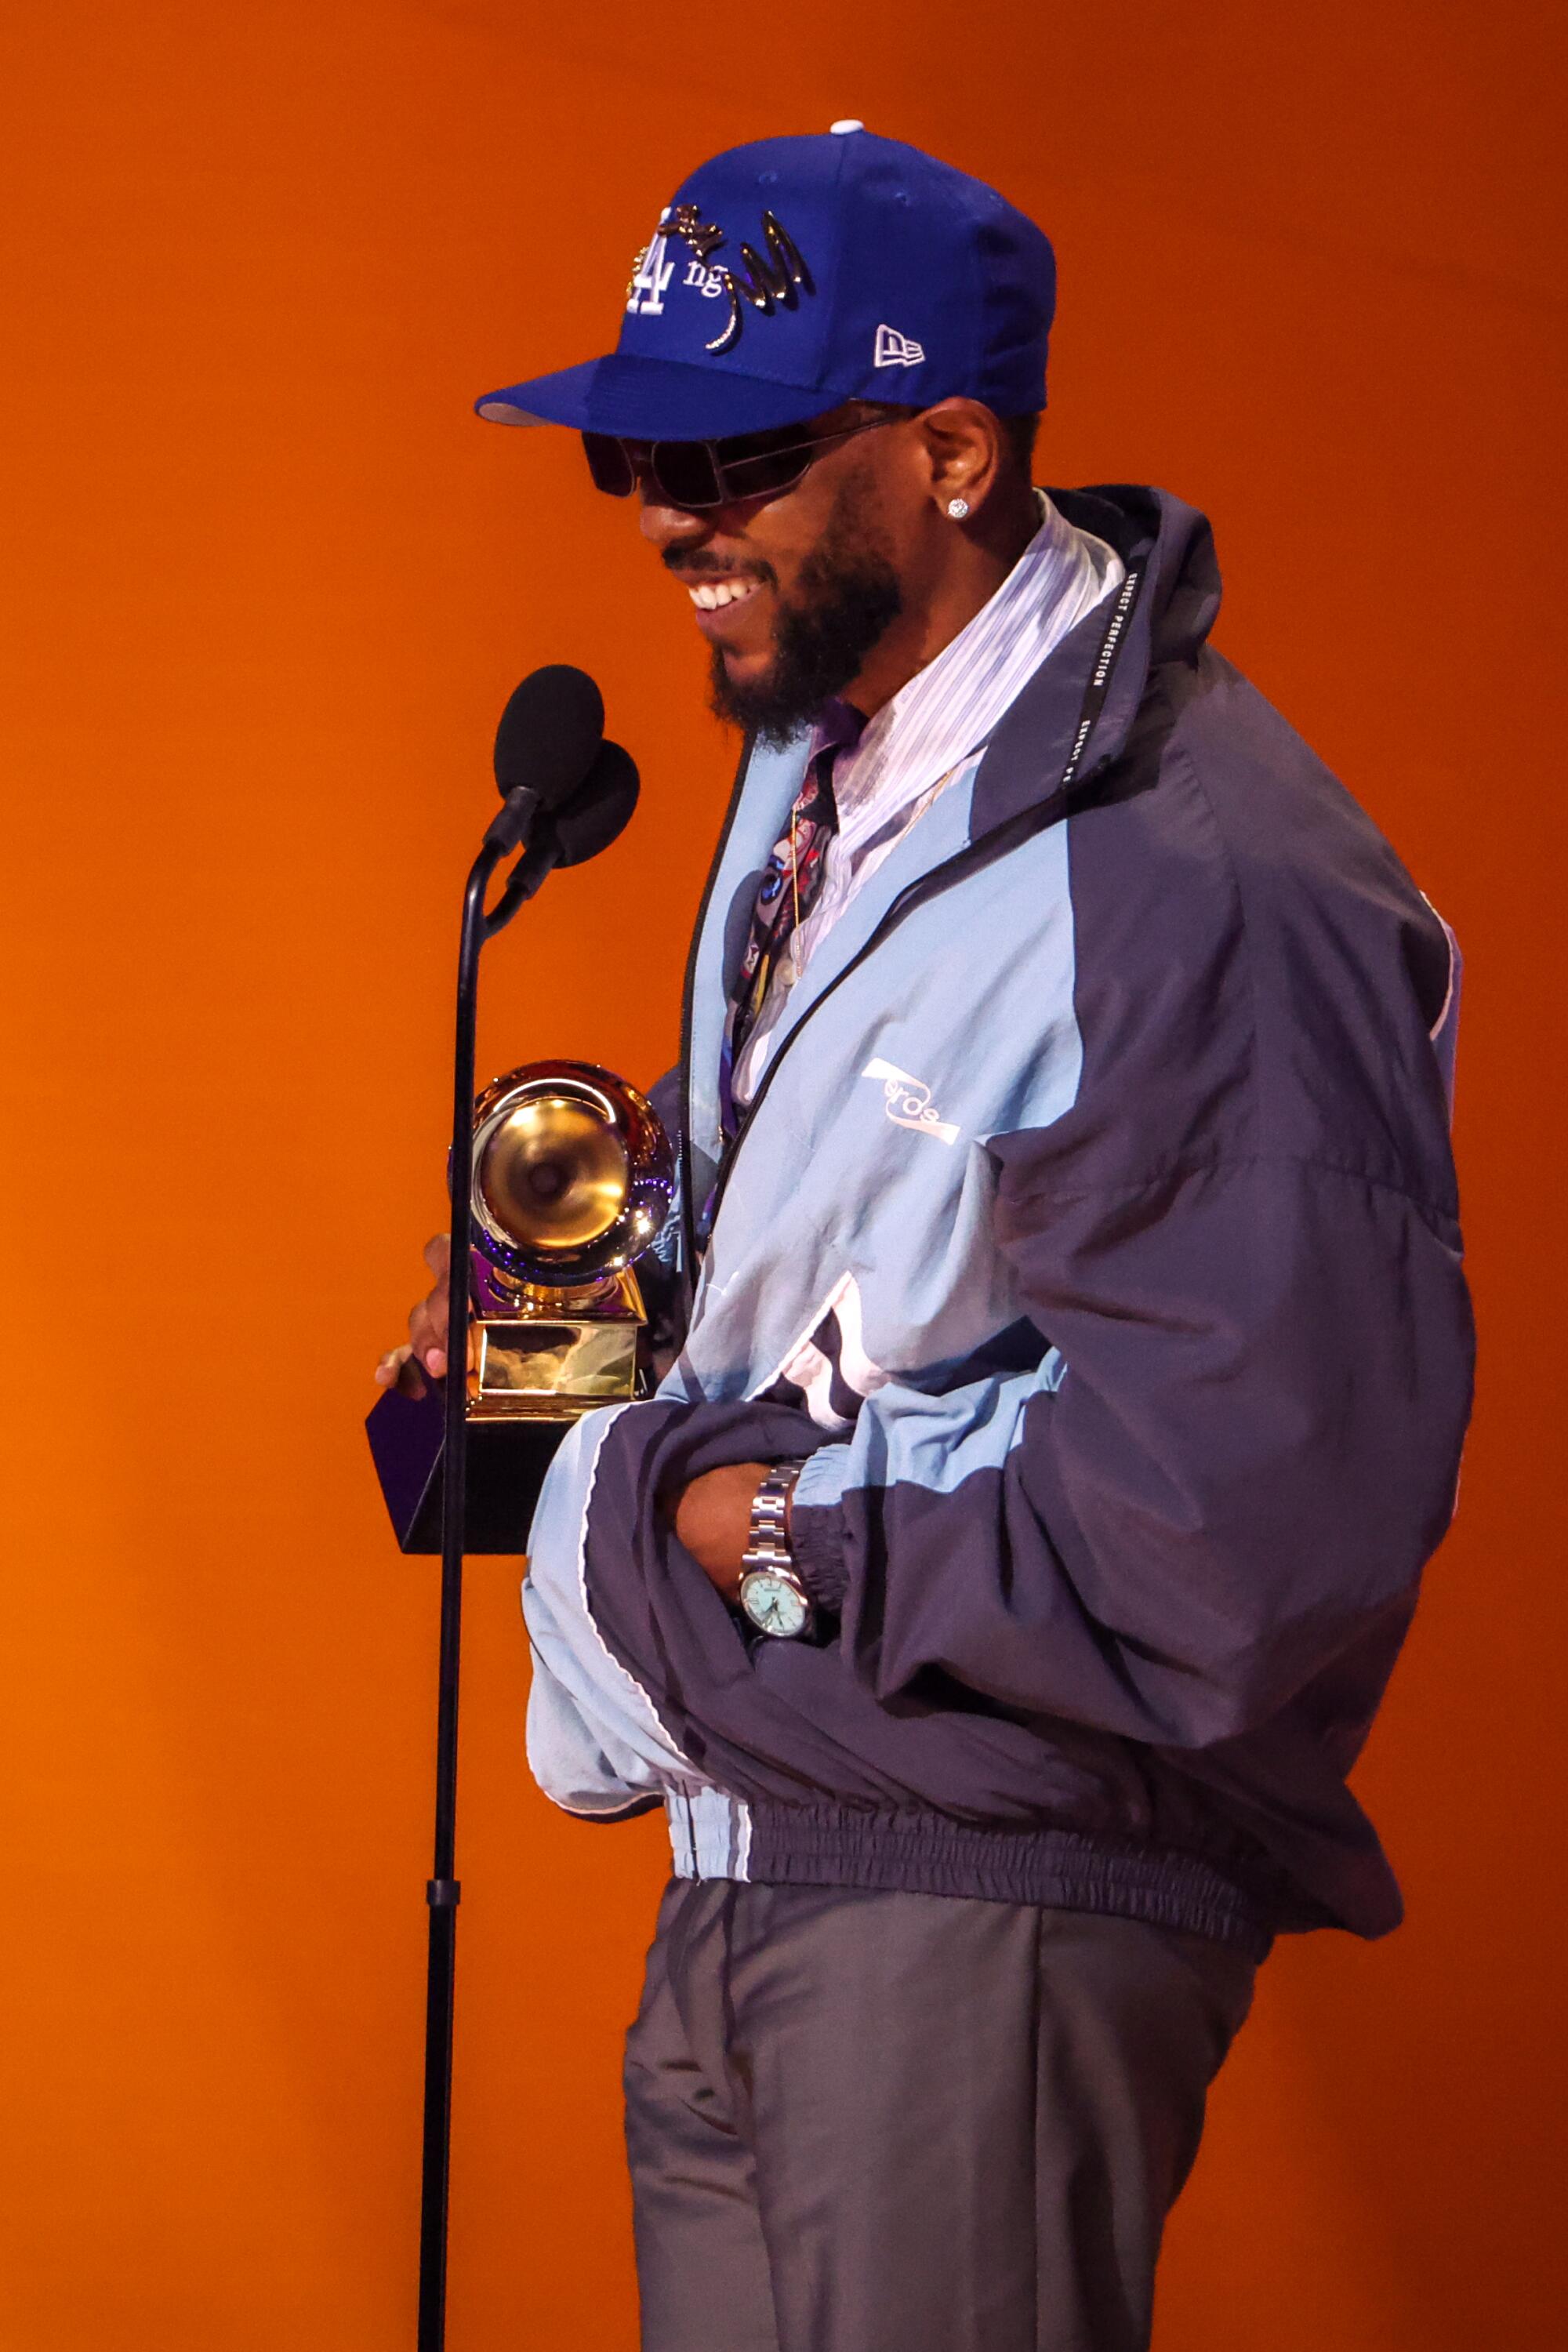 Get Grammys Awards 2023 Kendrick Lamar Jacket